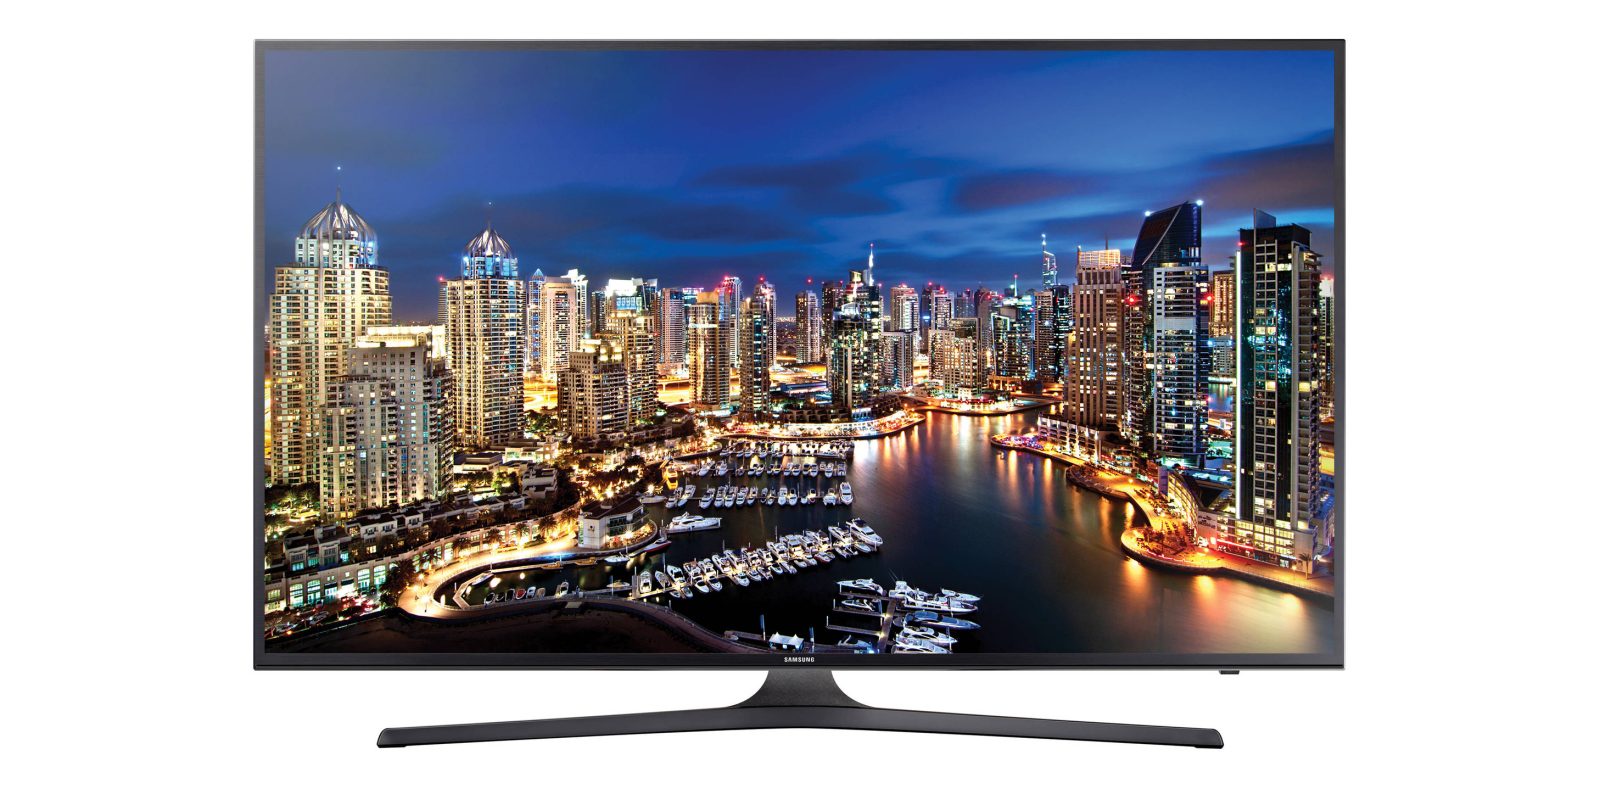 Cyber Monday TV Deals: Samsung 40&quot; 4K Smart UHDTV $290, Samsung Curved 55&quot; 4K w/ $100 Amazon ...